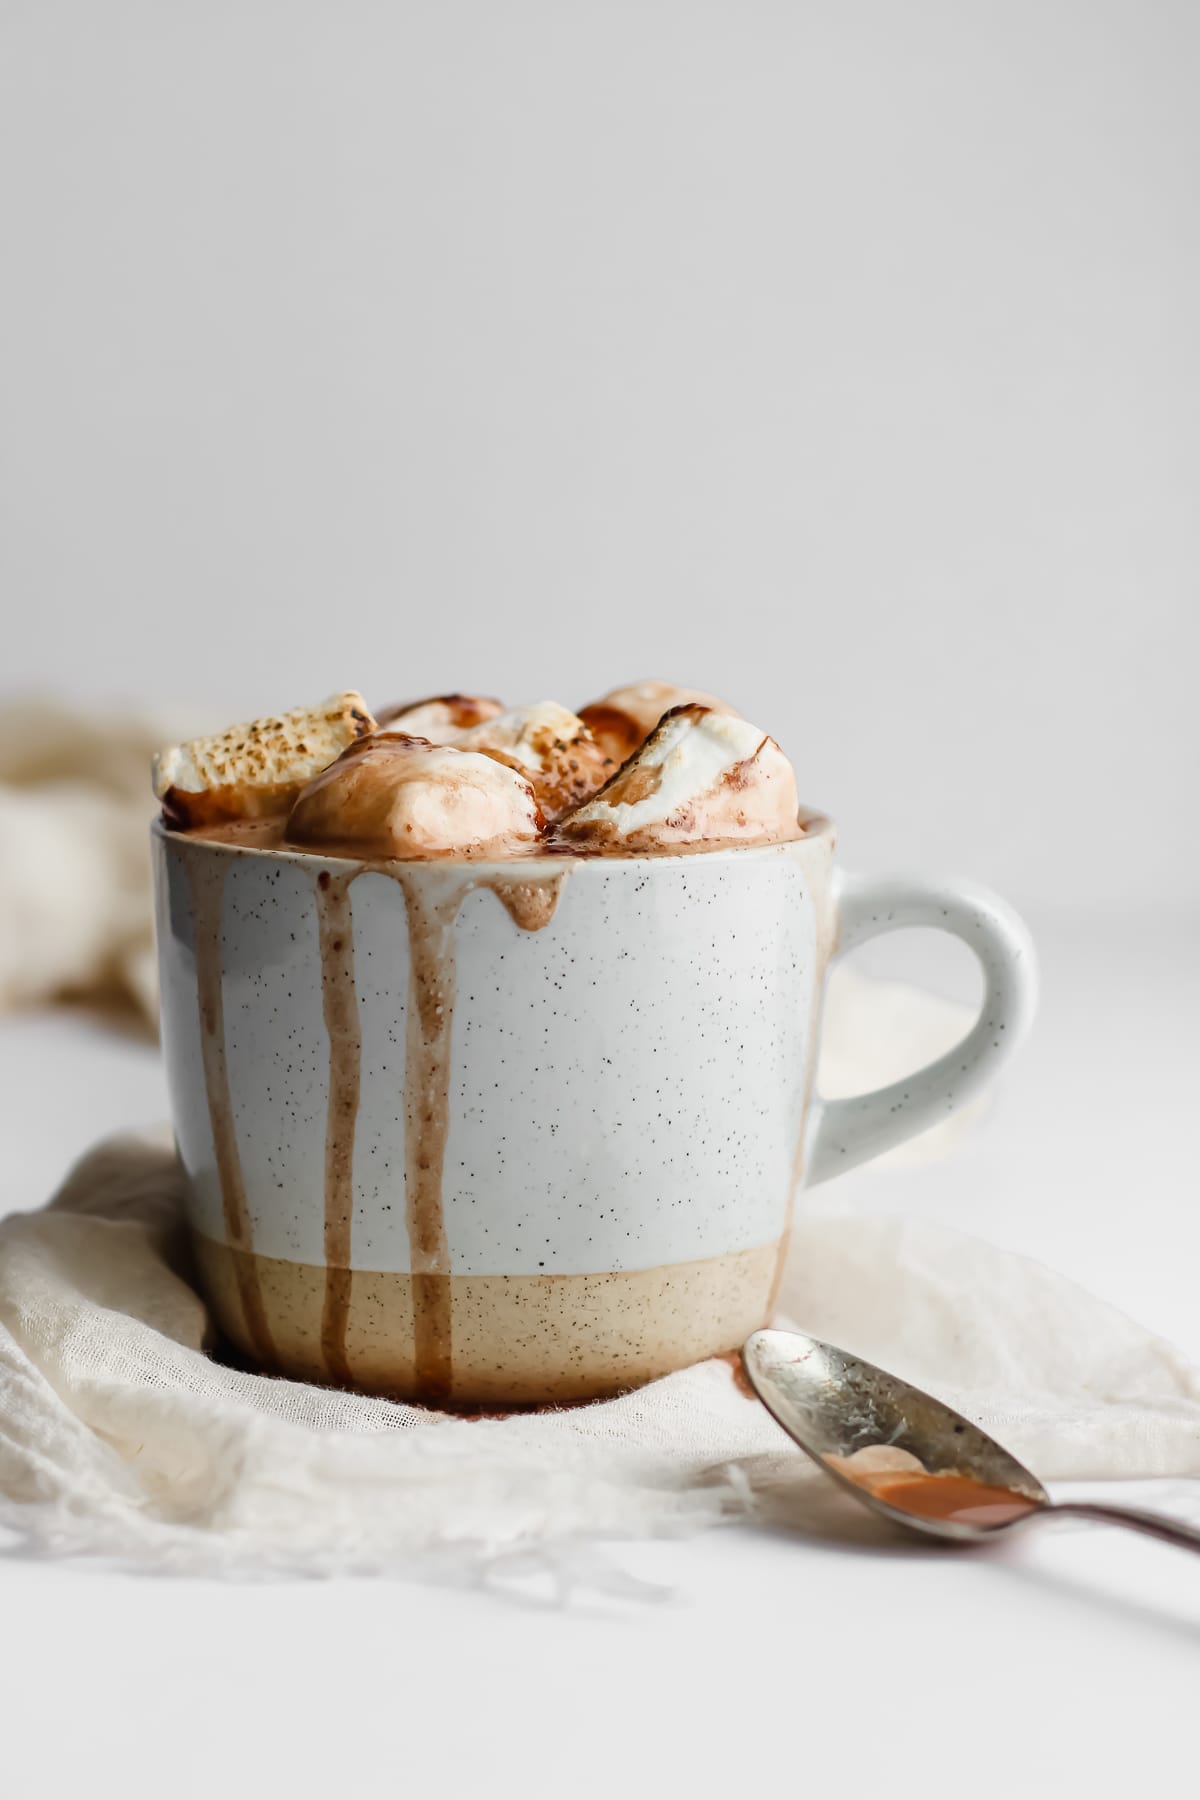 Mug of dairy-free hot chocolate with marshallows on top,